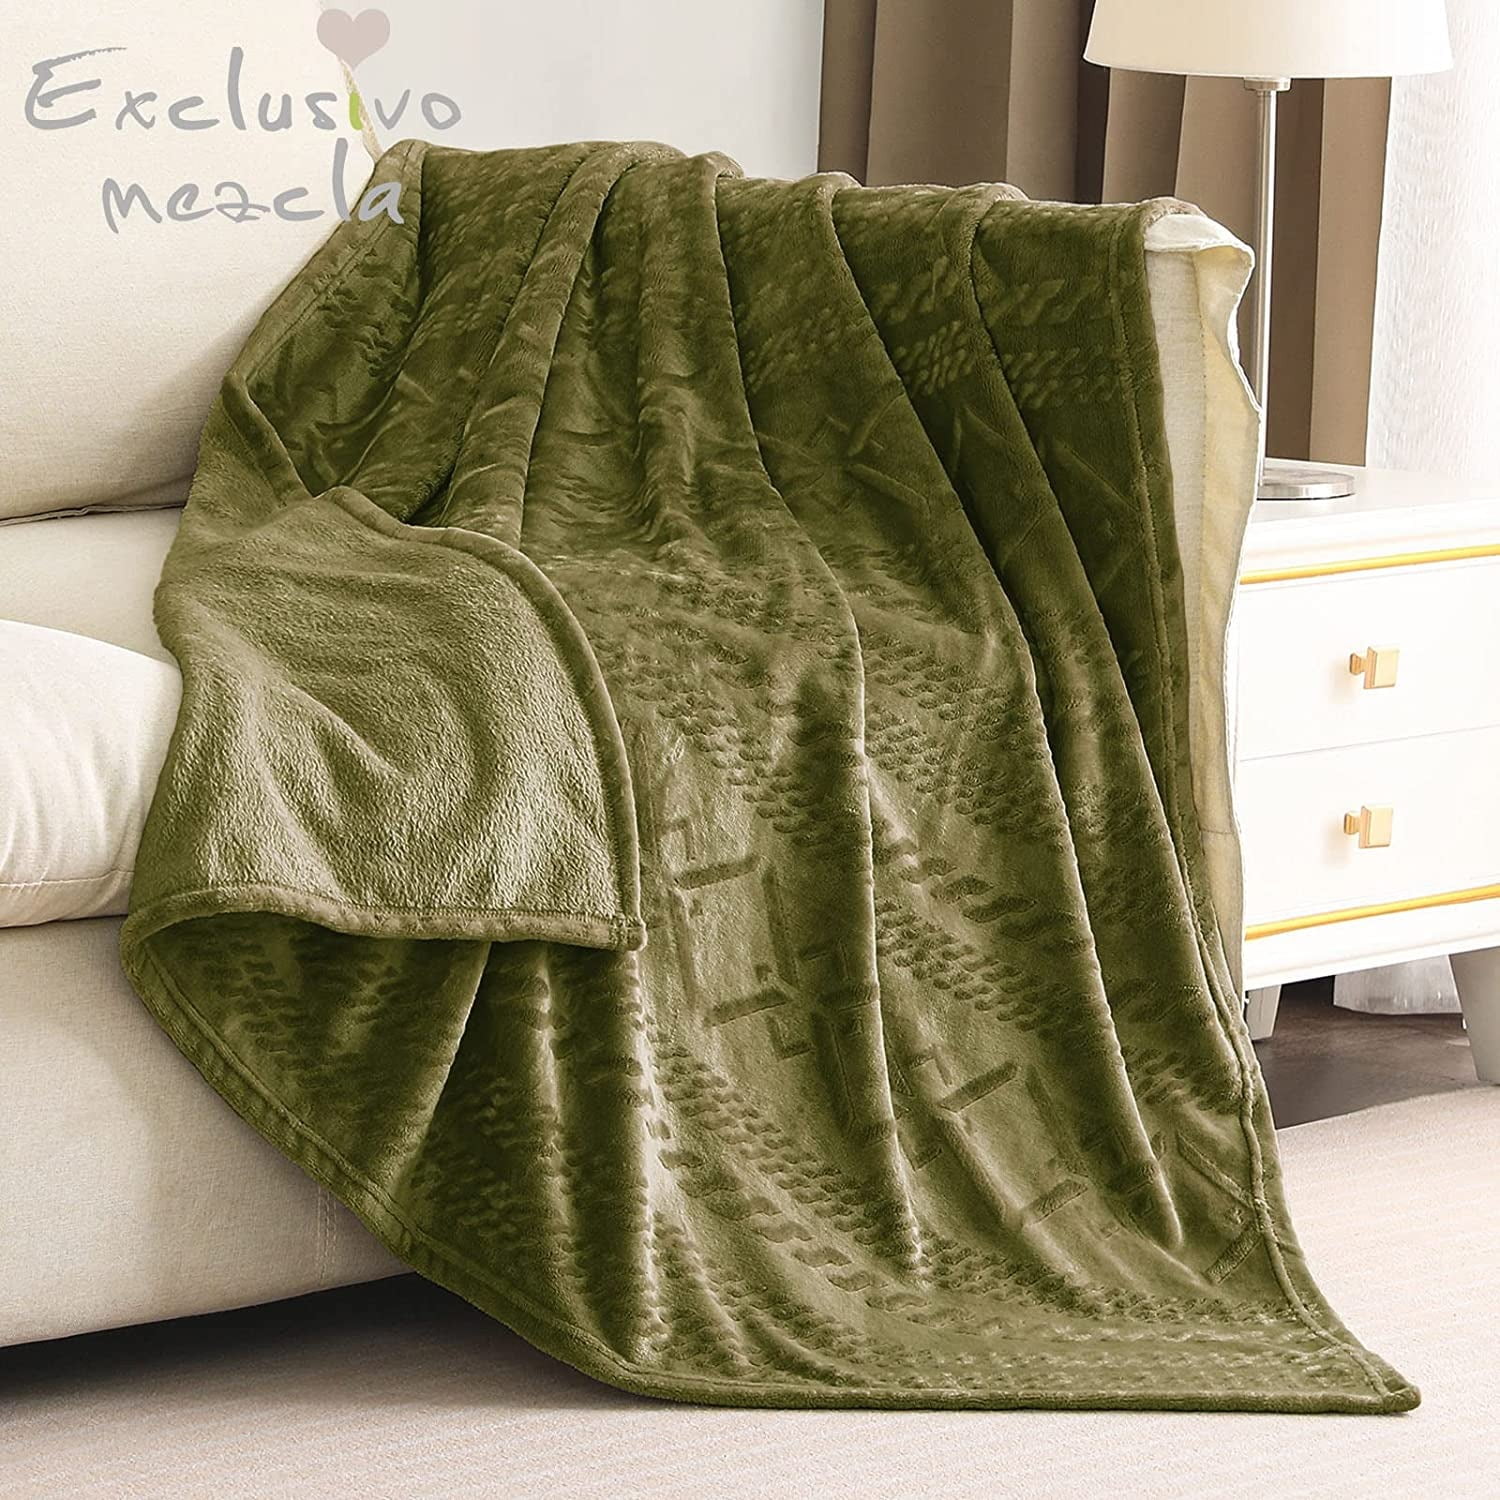 Exclusivo Mezcla Soft Throw Blanket, Large Fuzzy Fleece Blanket ...